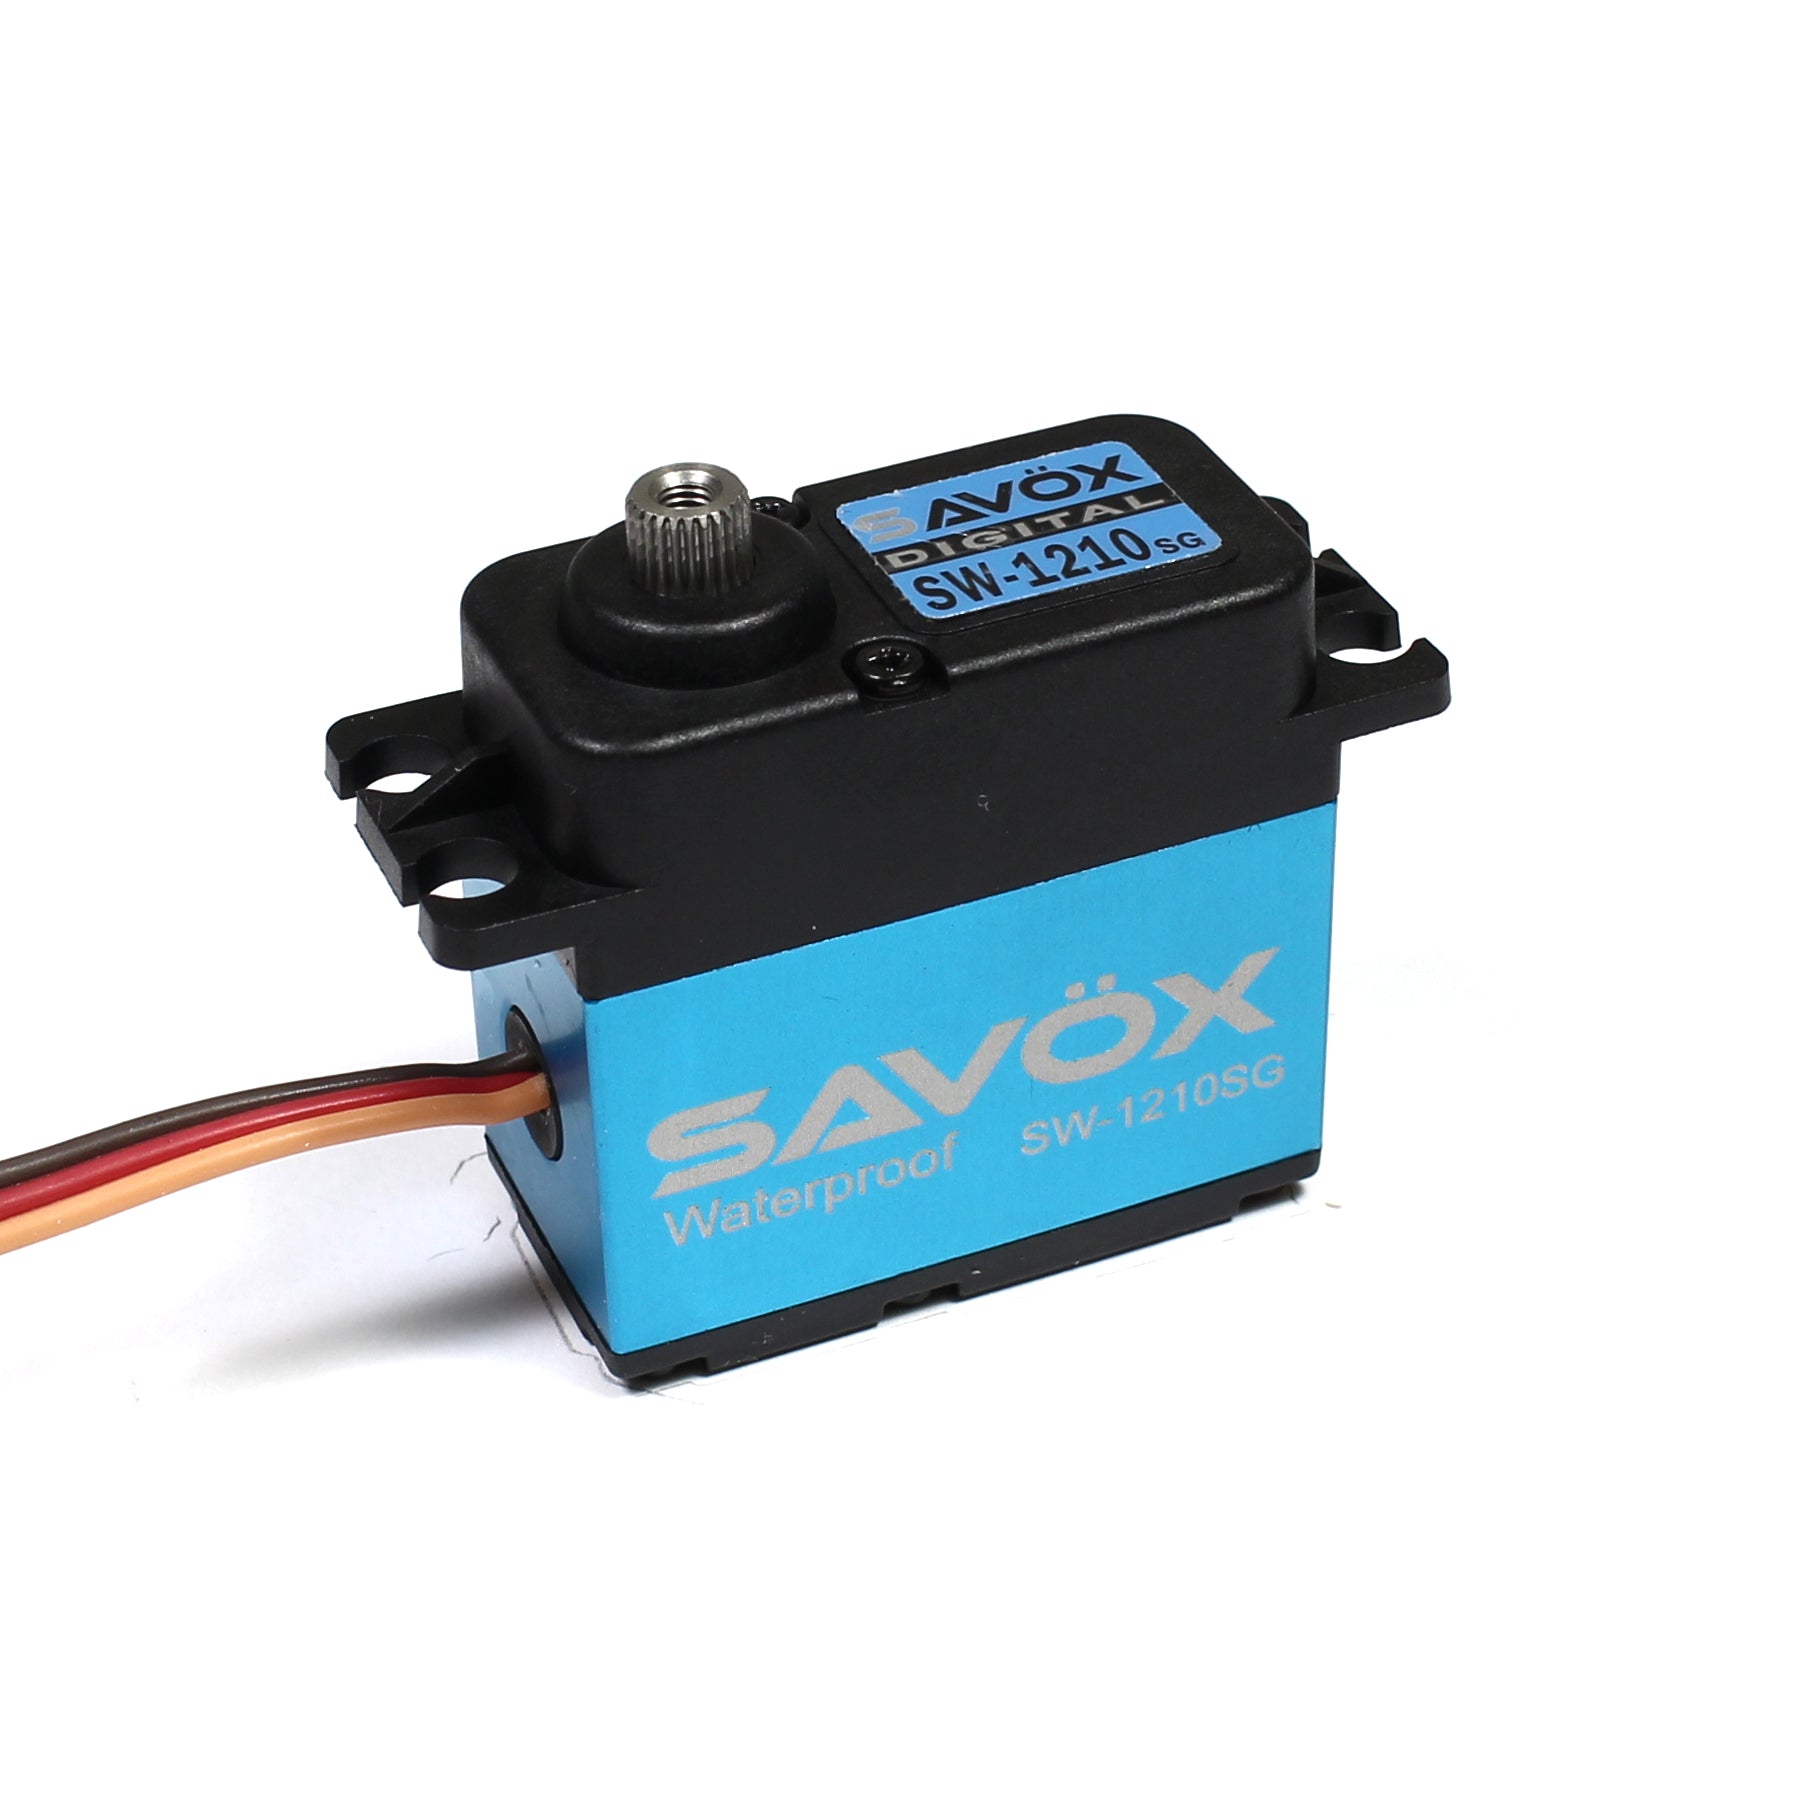 Savox SW-1210SG Caja de aluminio impermeable digital Servo (Alto voltaje) (Alto) 